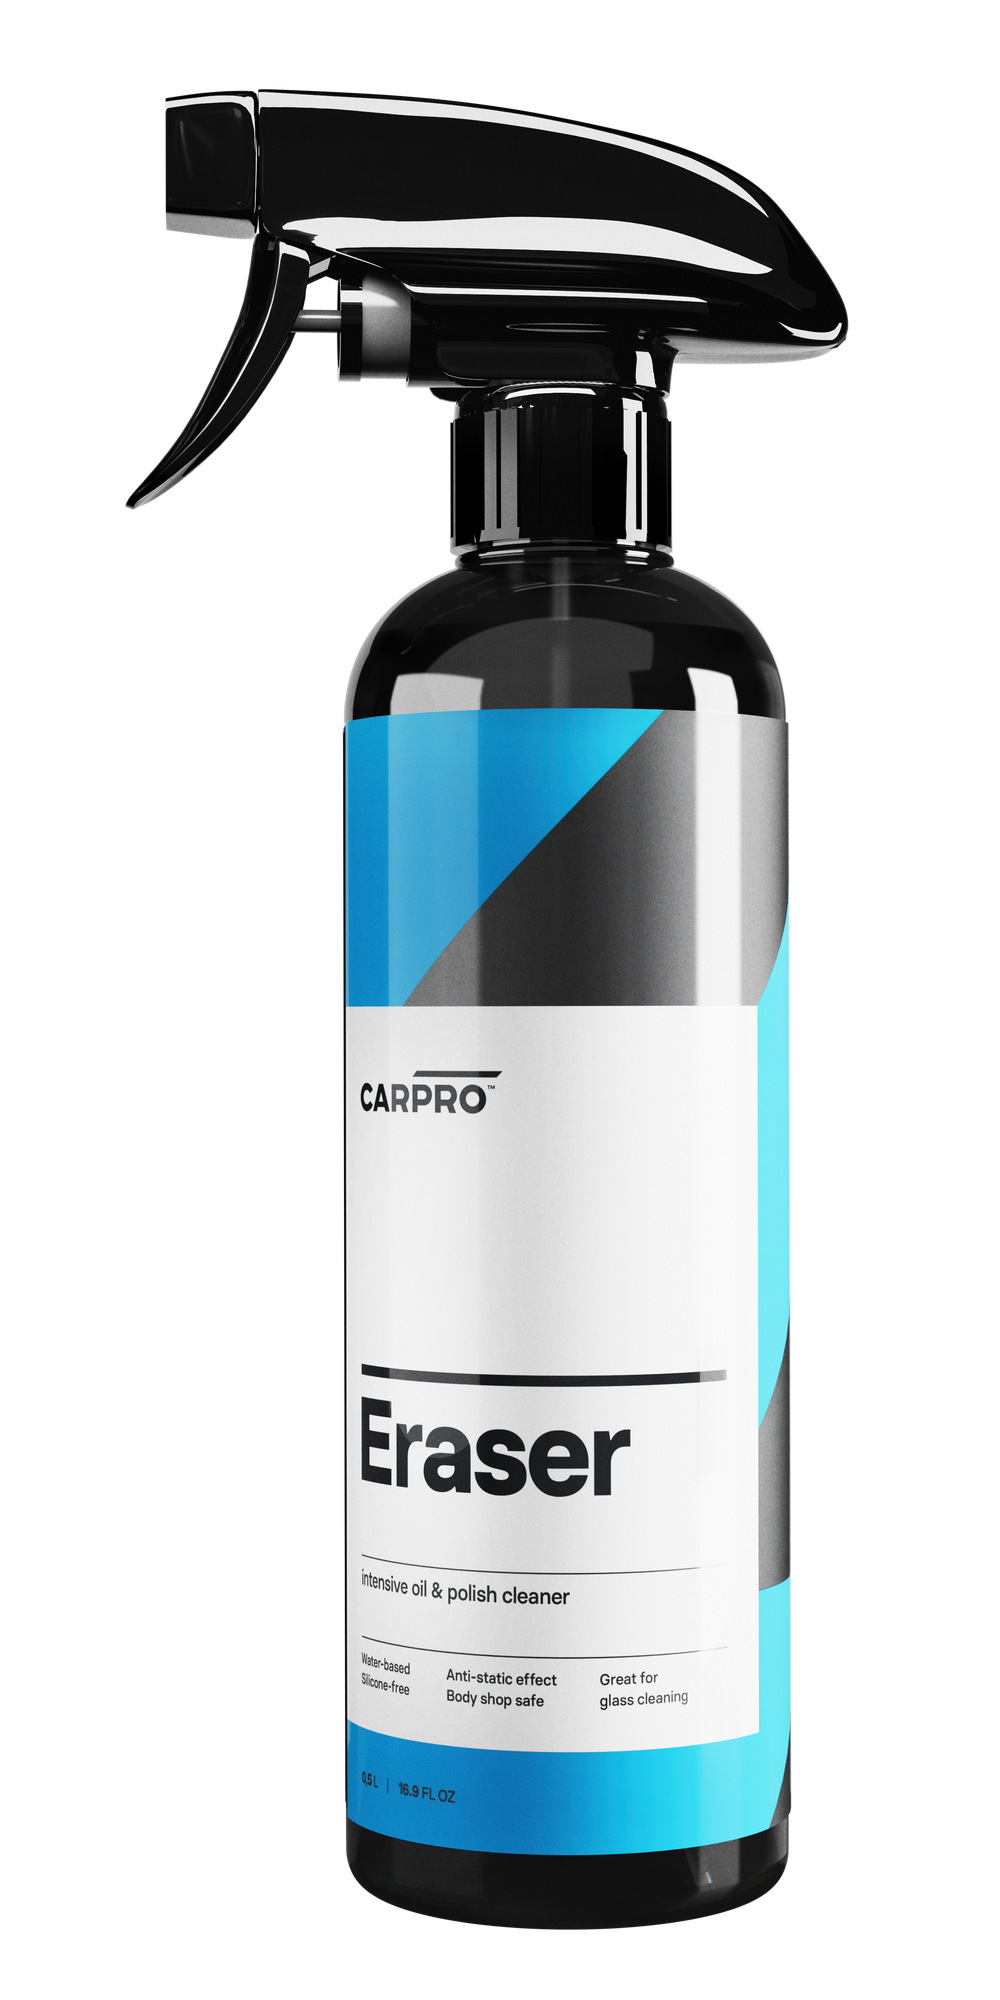 CARPRO Eraser 500mL - Oil and polish cleaner